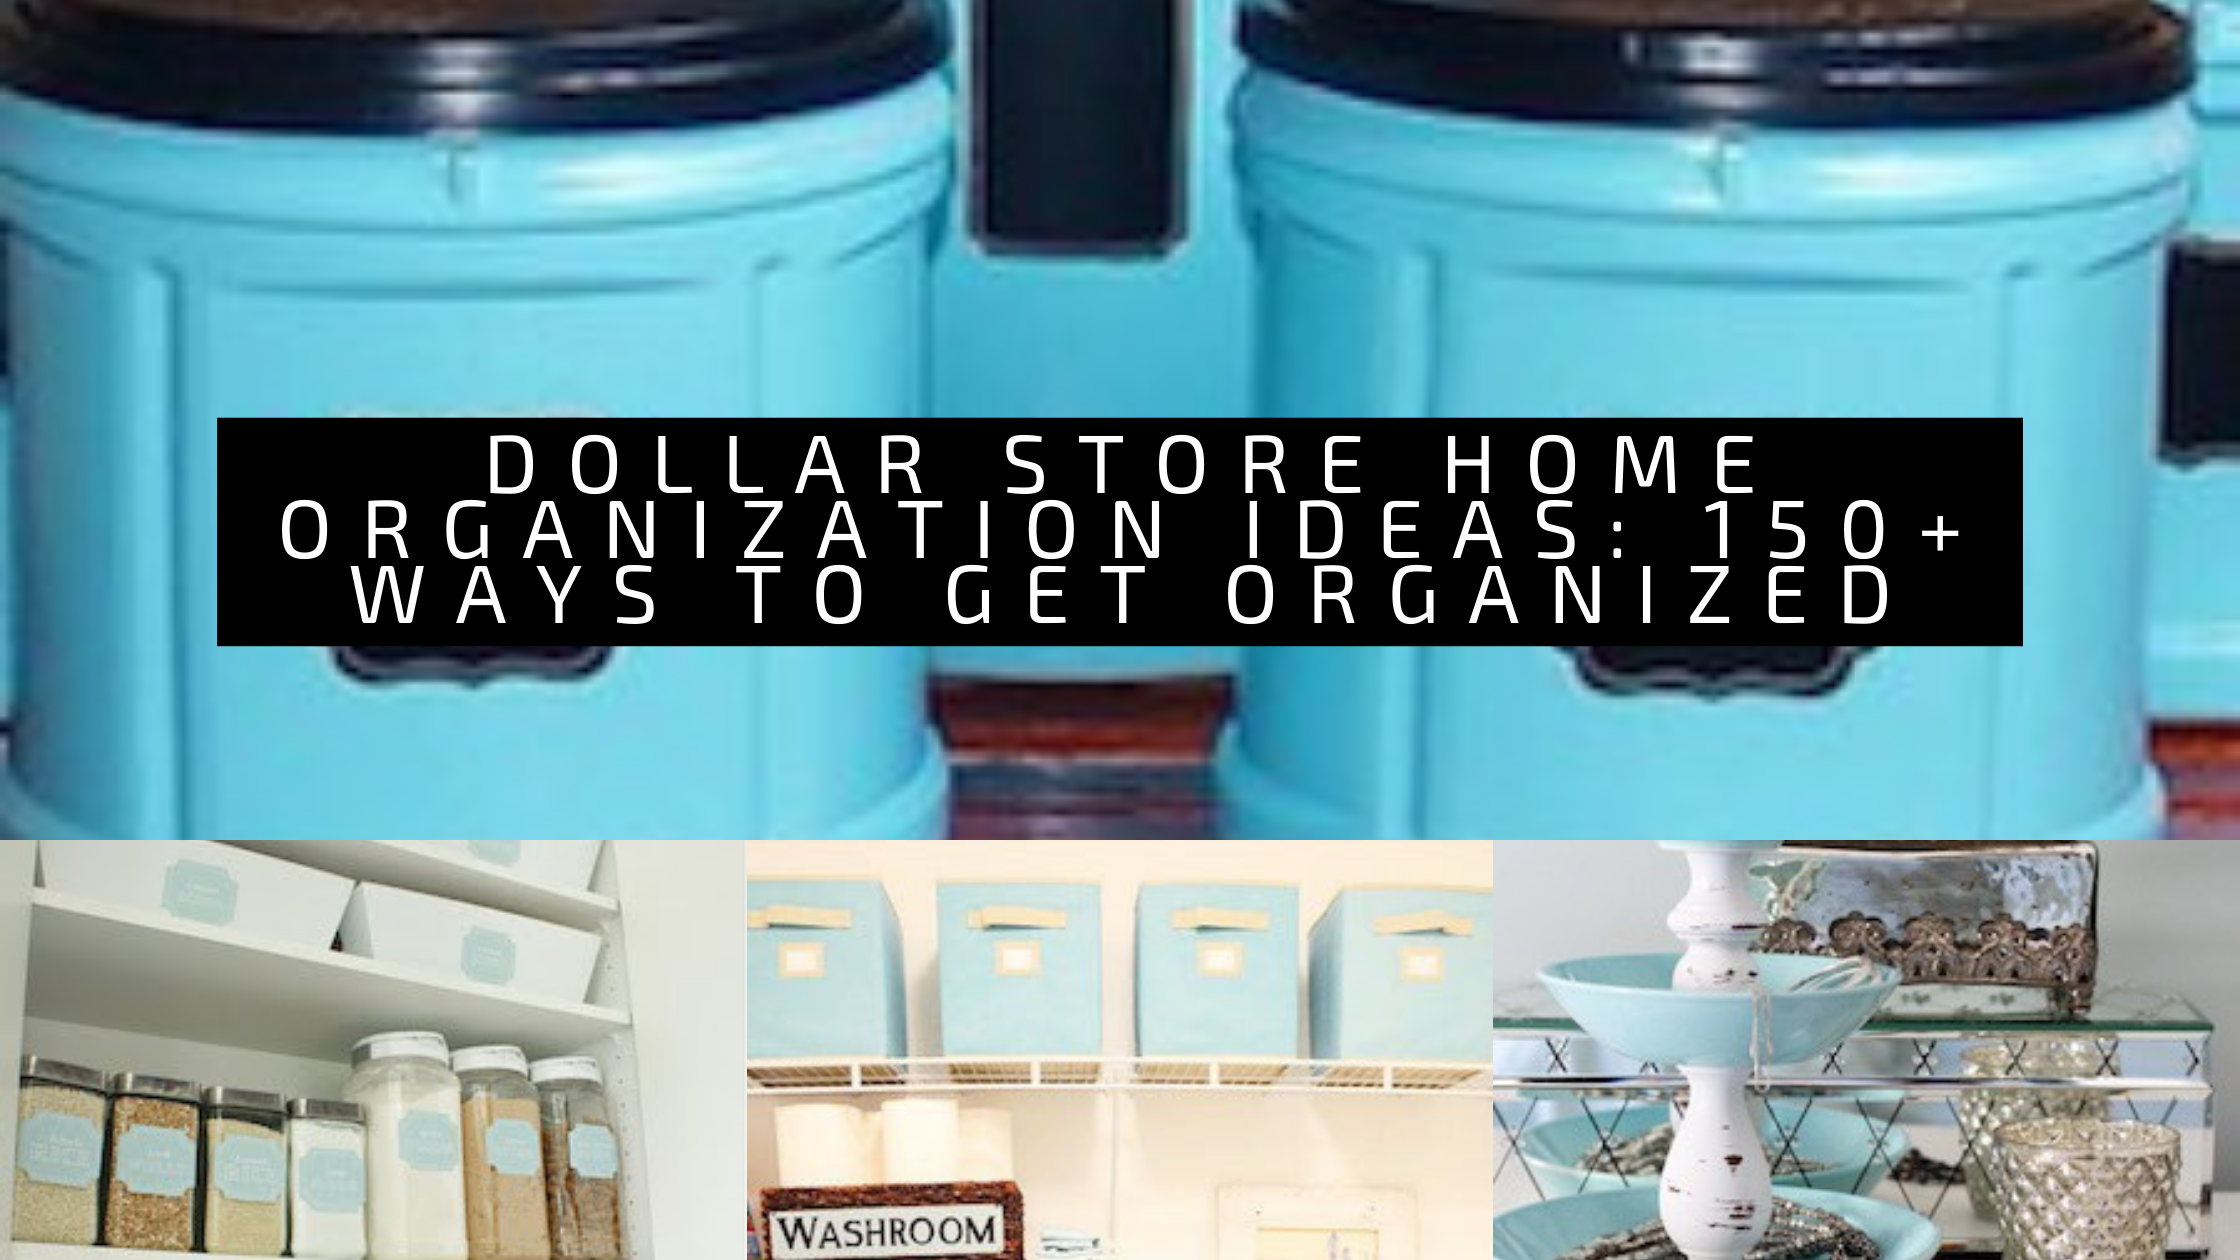 Dollar Store Home Organization Ideas: 150+ Ways to Get Organized 52